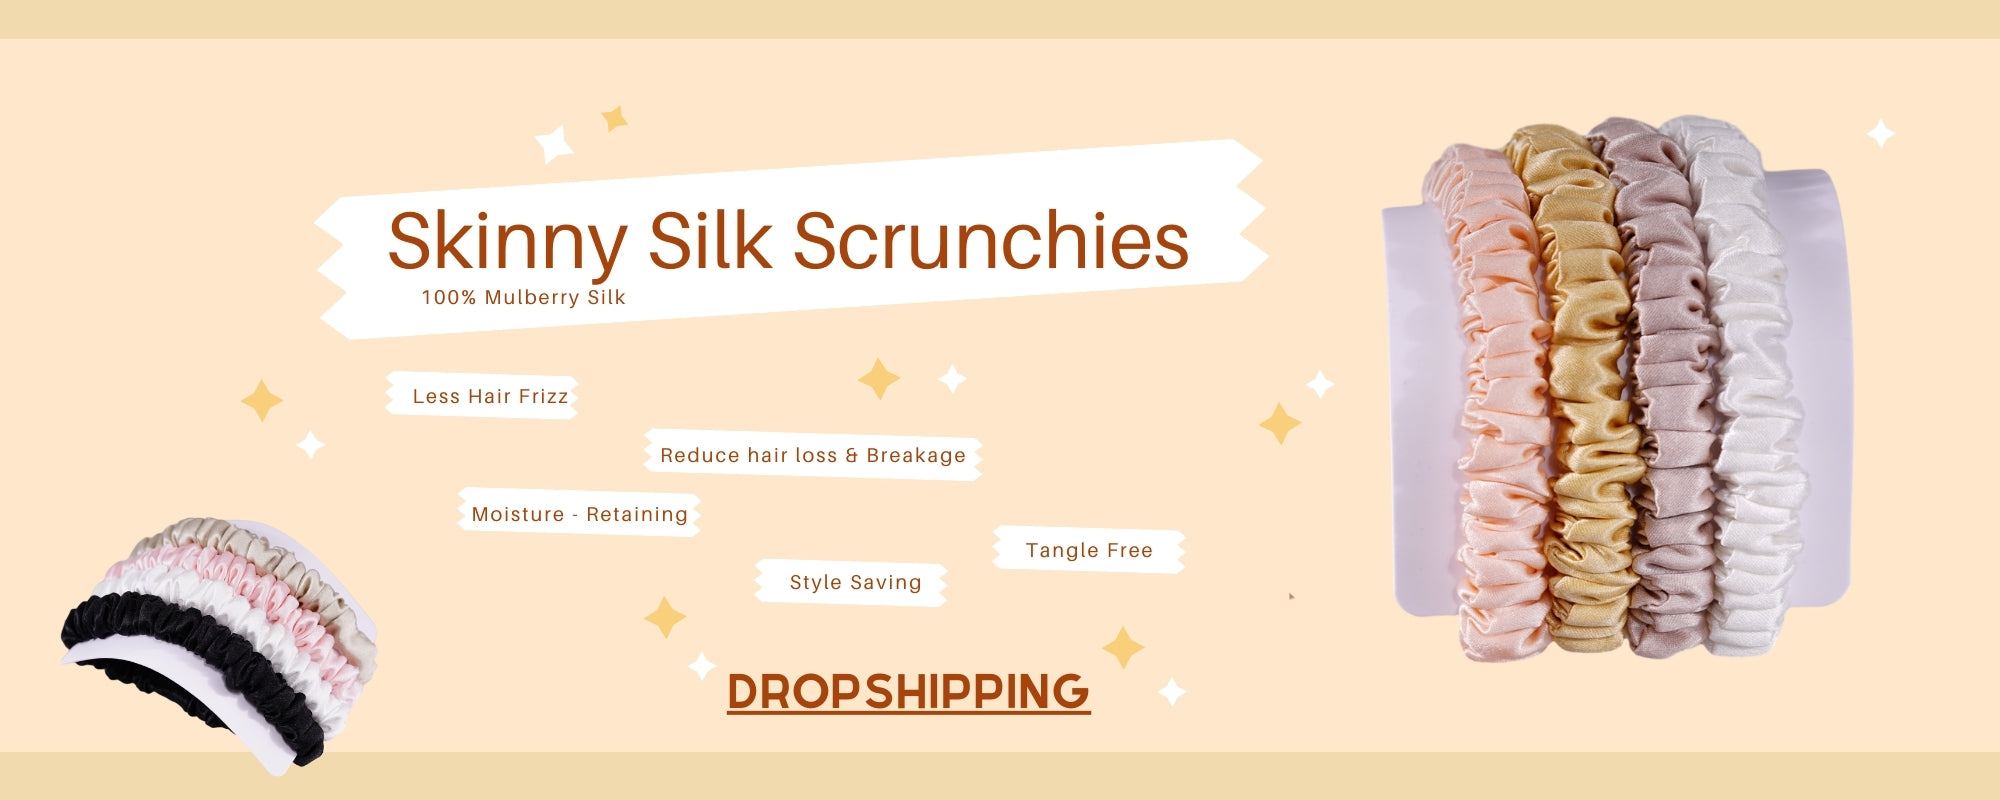 Skinny silk scrunchies